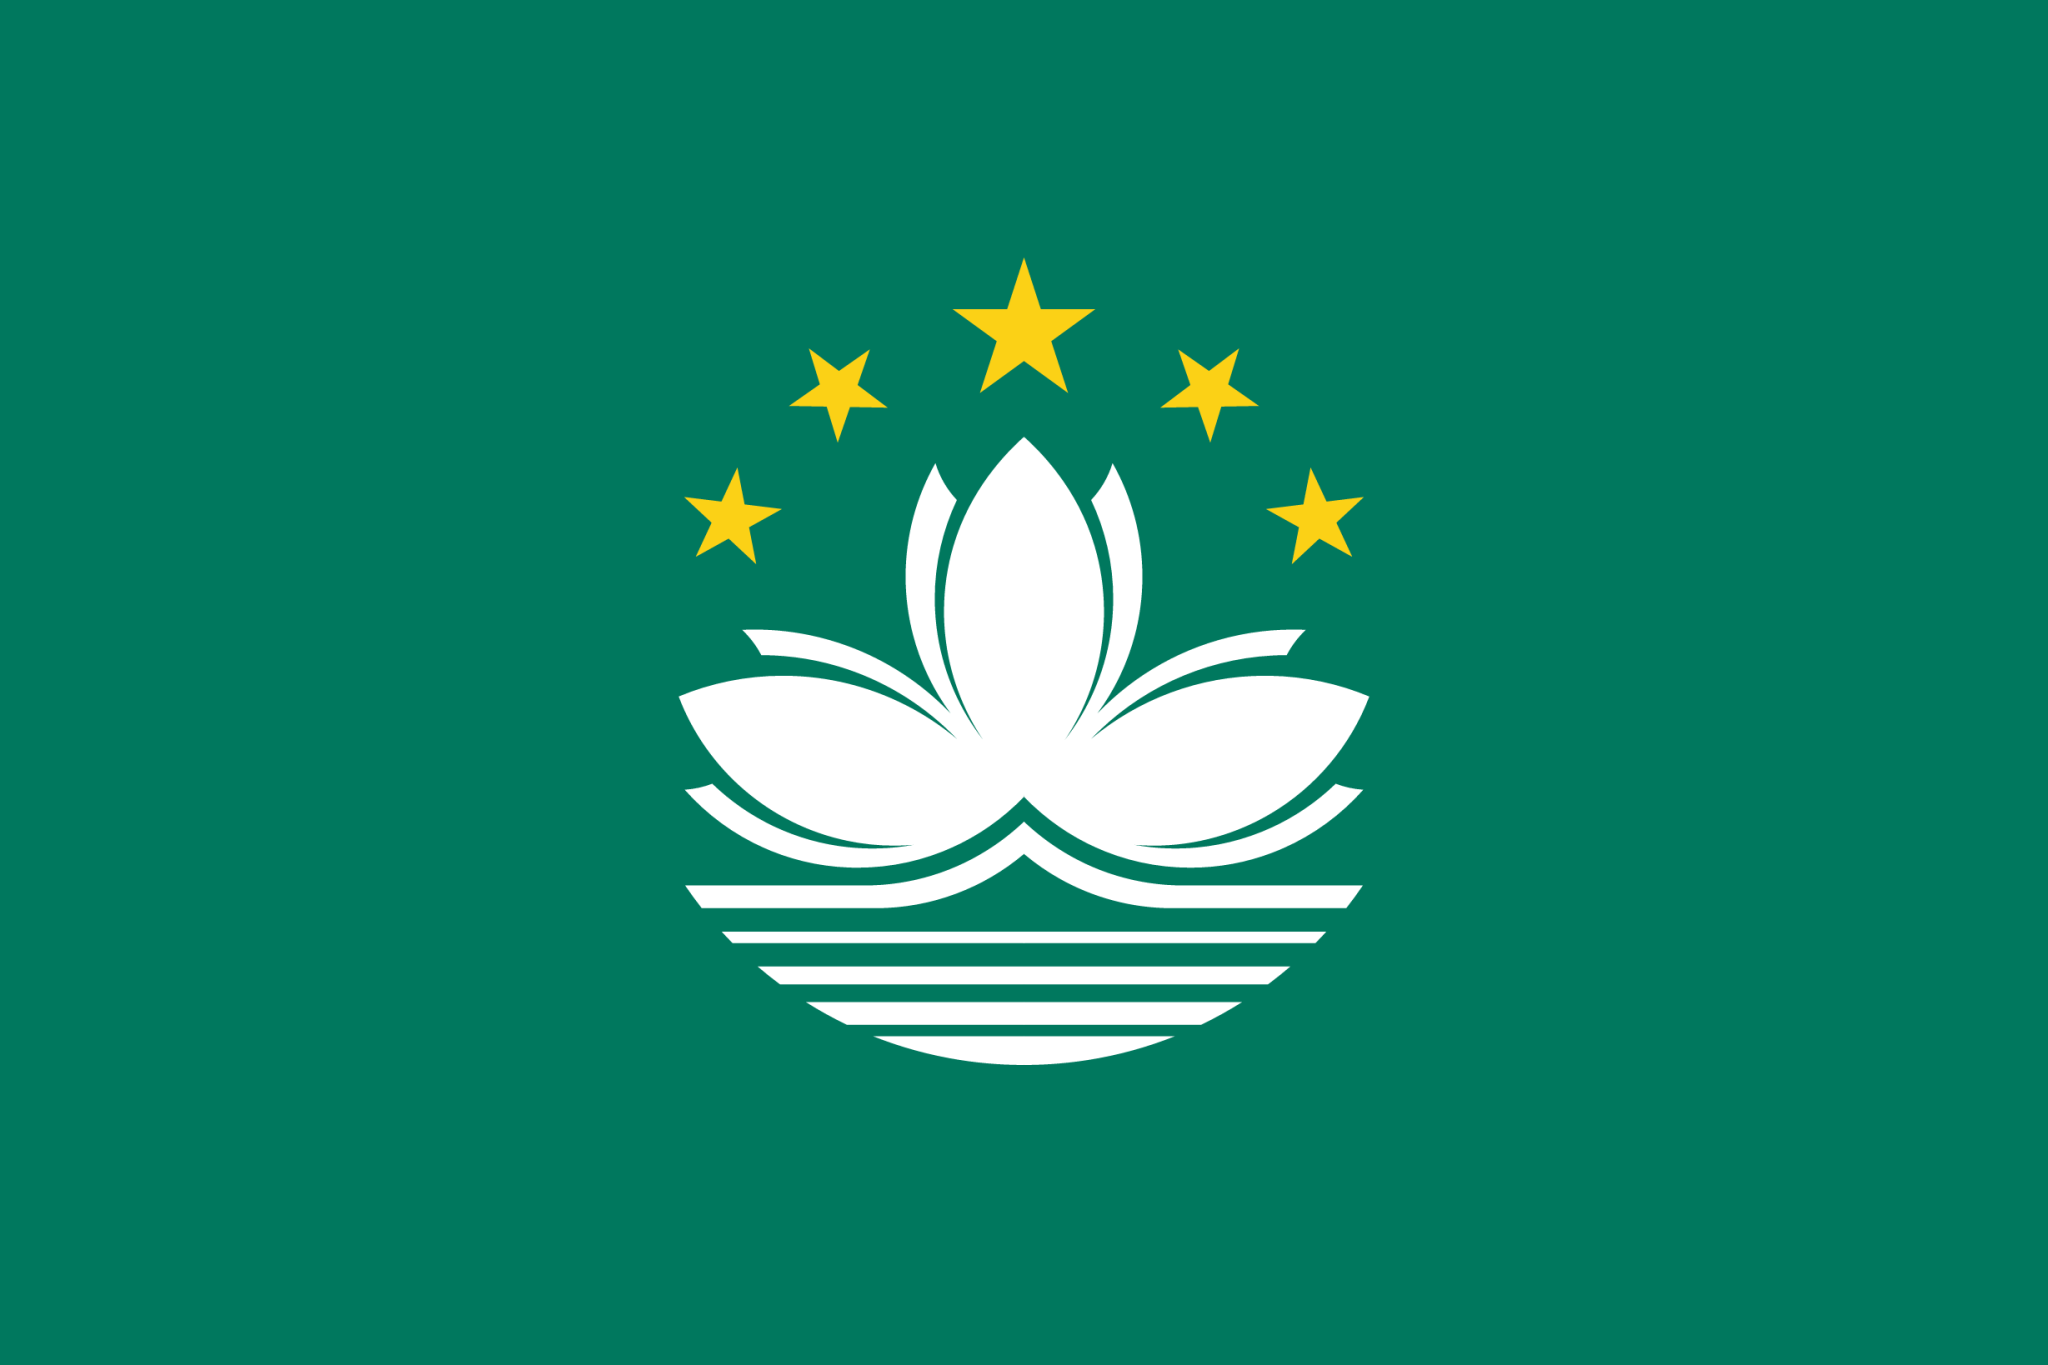 Macao icon